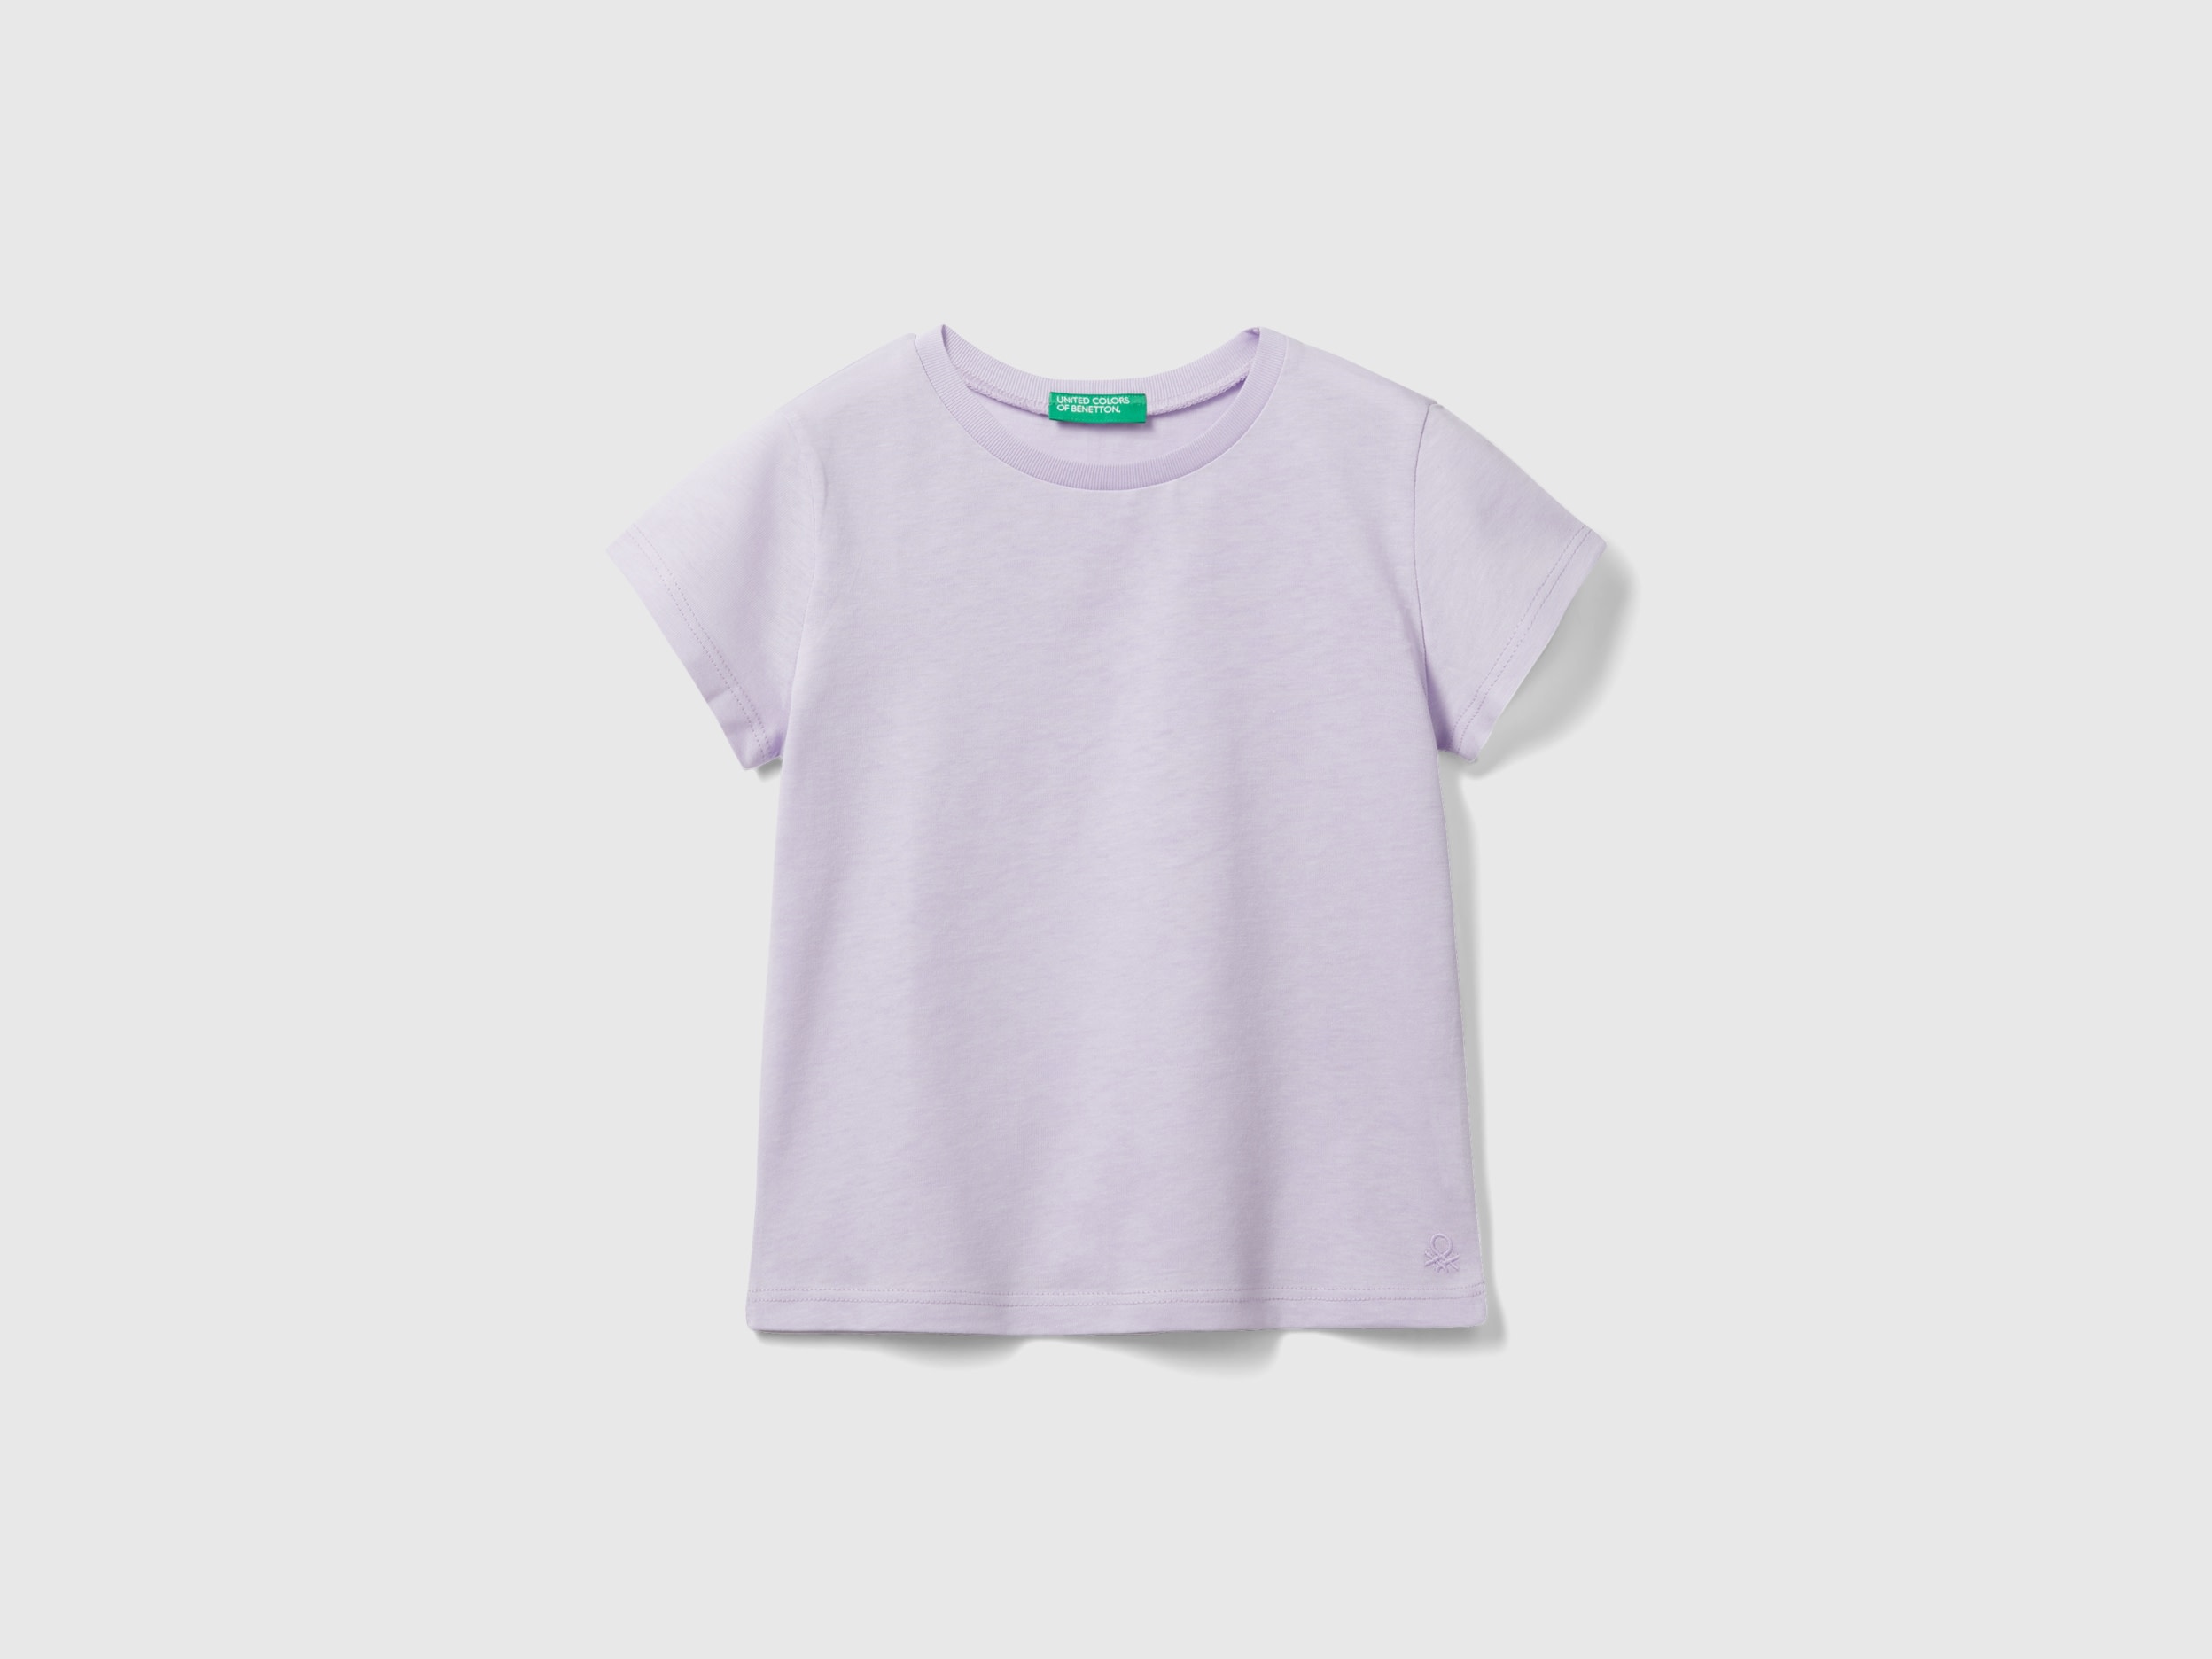 Image of Benetton, 100% Organic Cotton T-shirt, size 116, Lilac, Kids